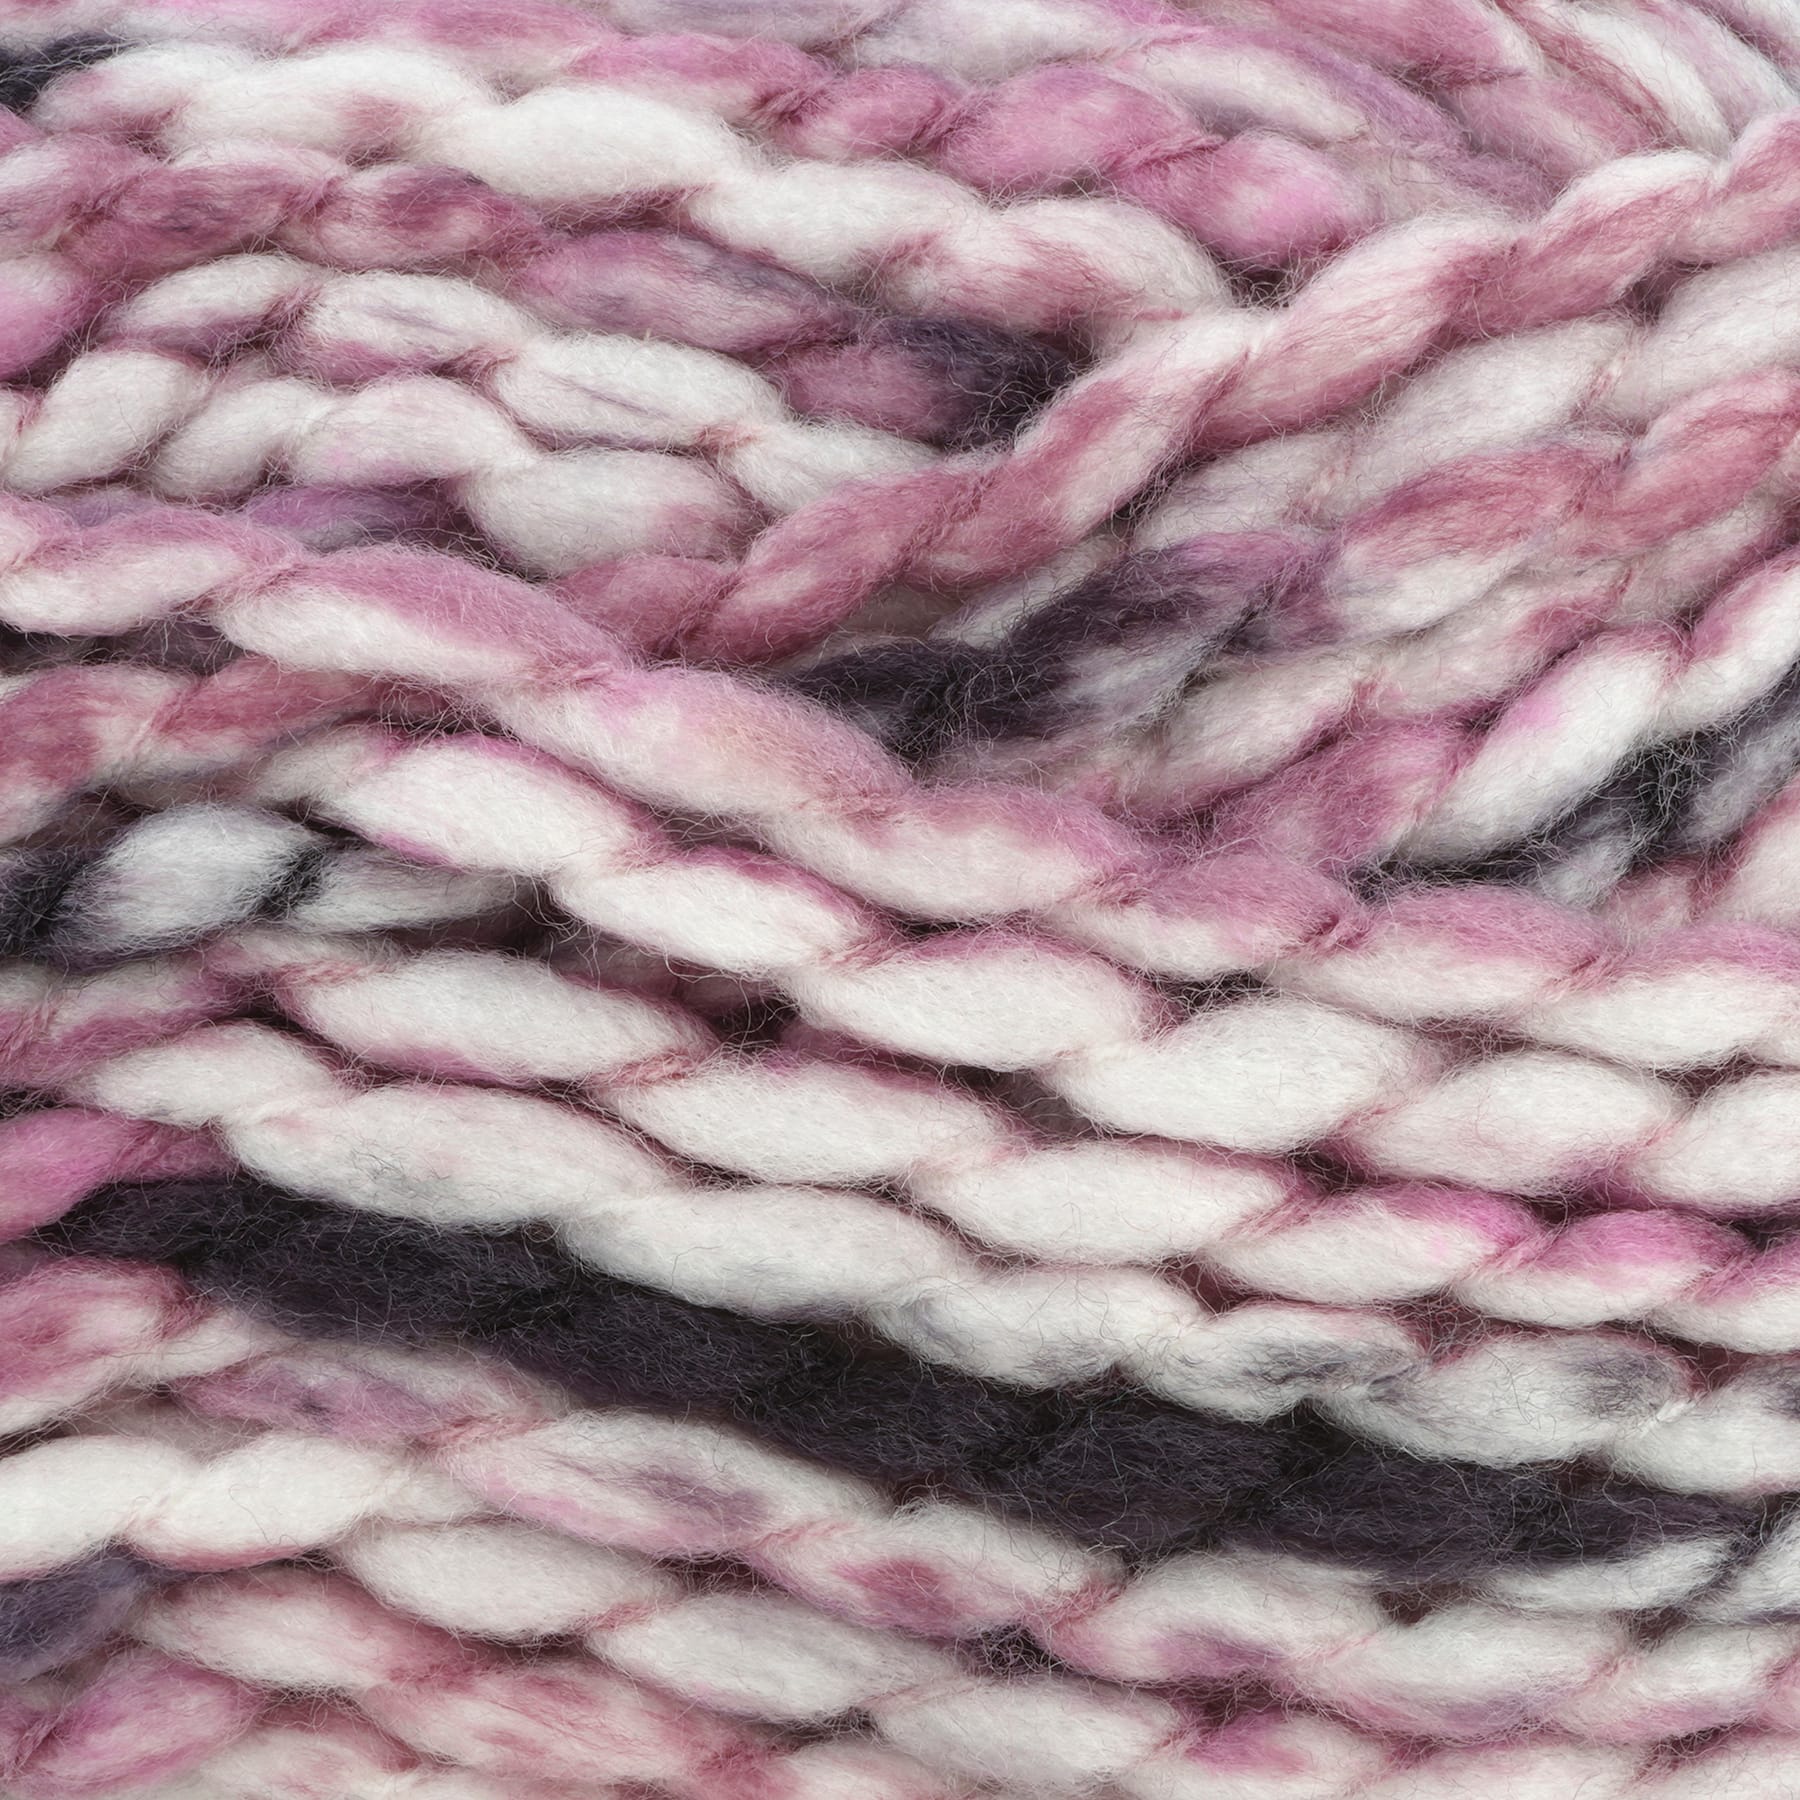 Loops & Threads Twisted Tones Yarn - Pastel - 5.3 oz